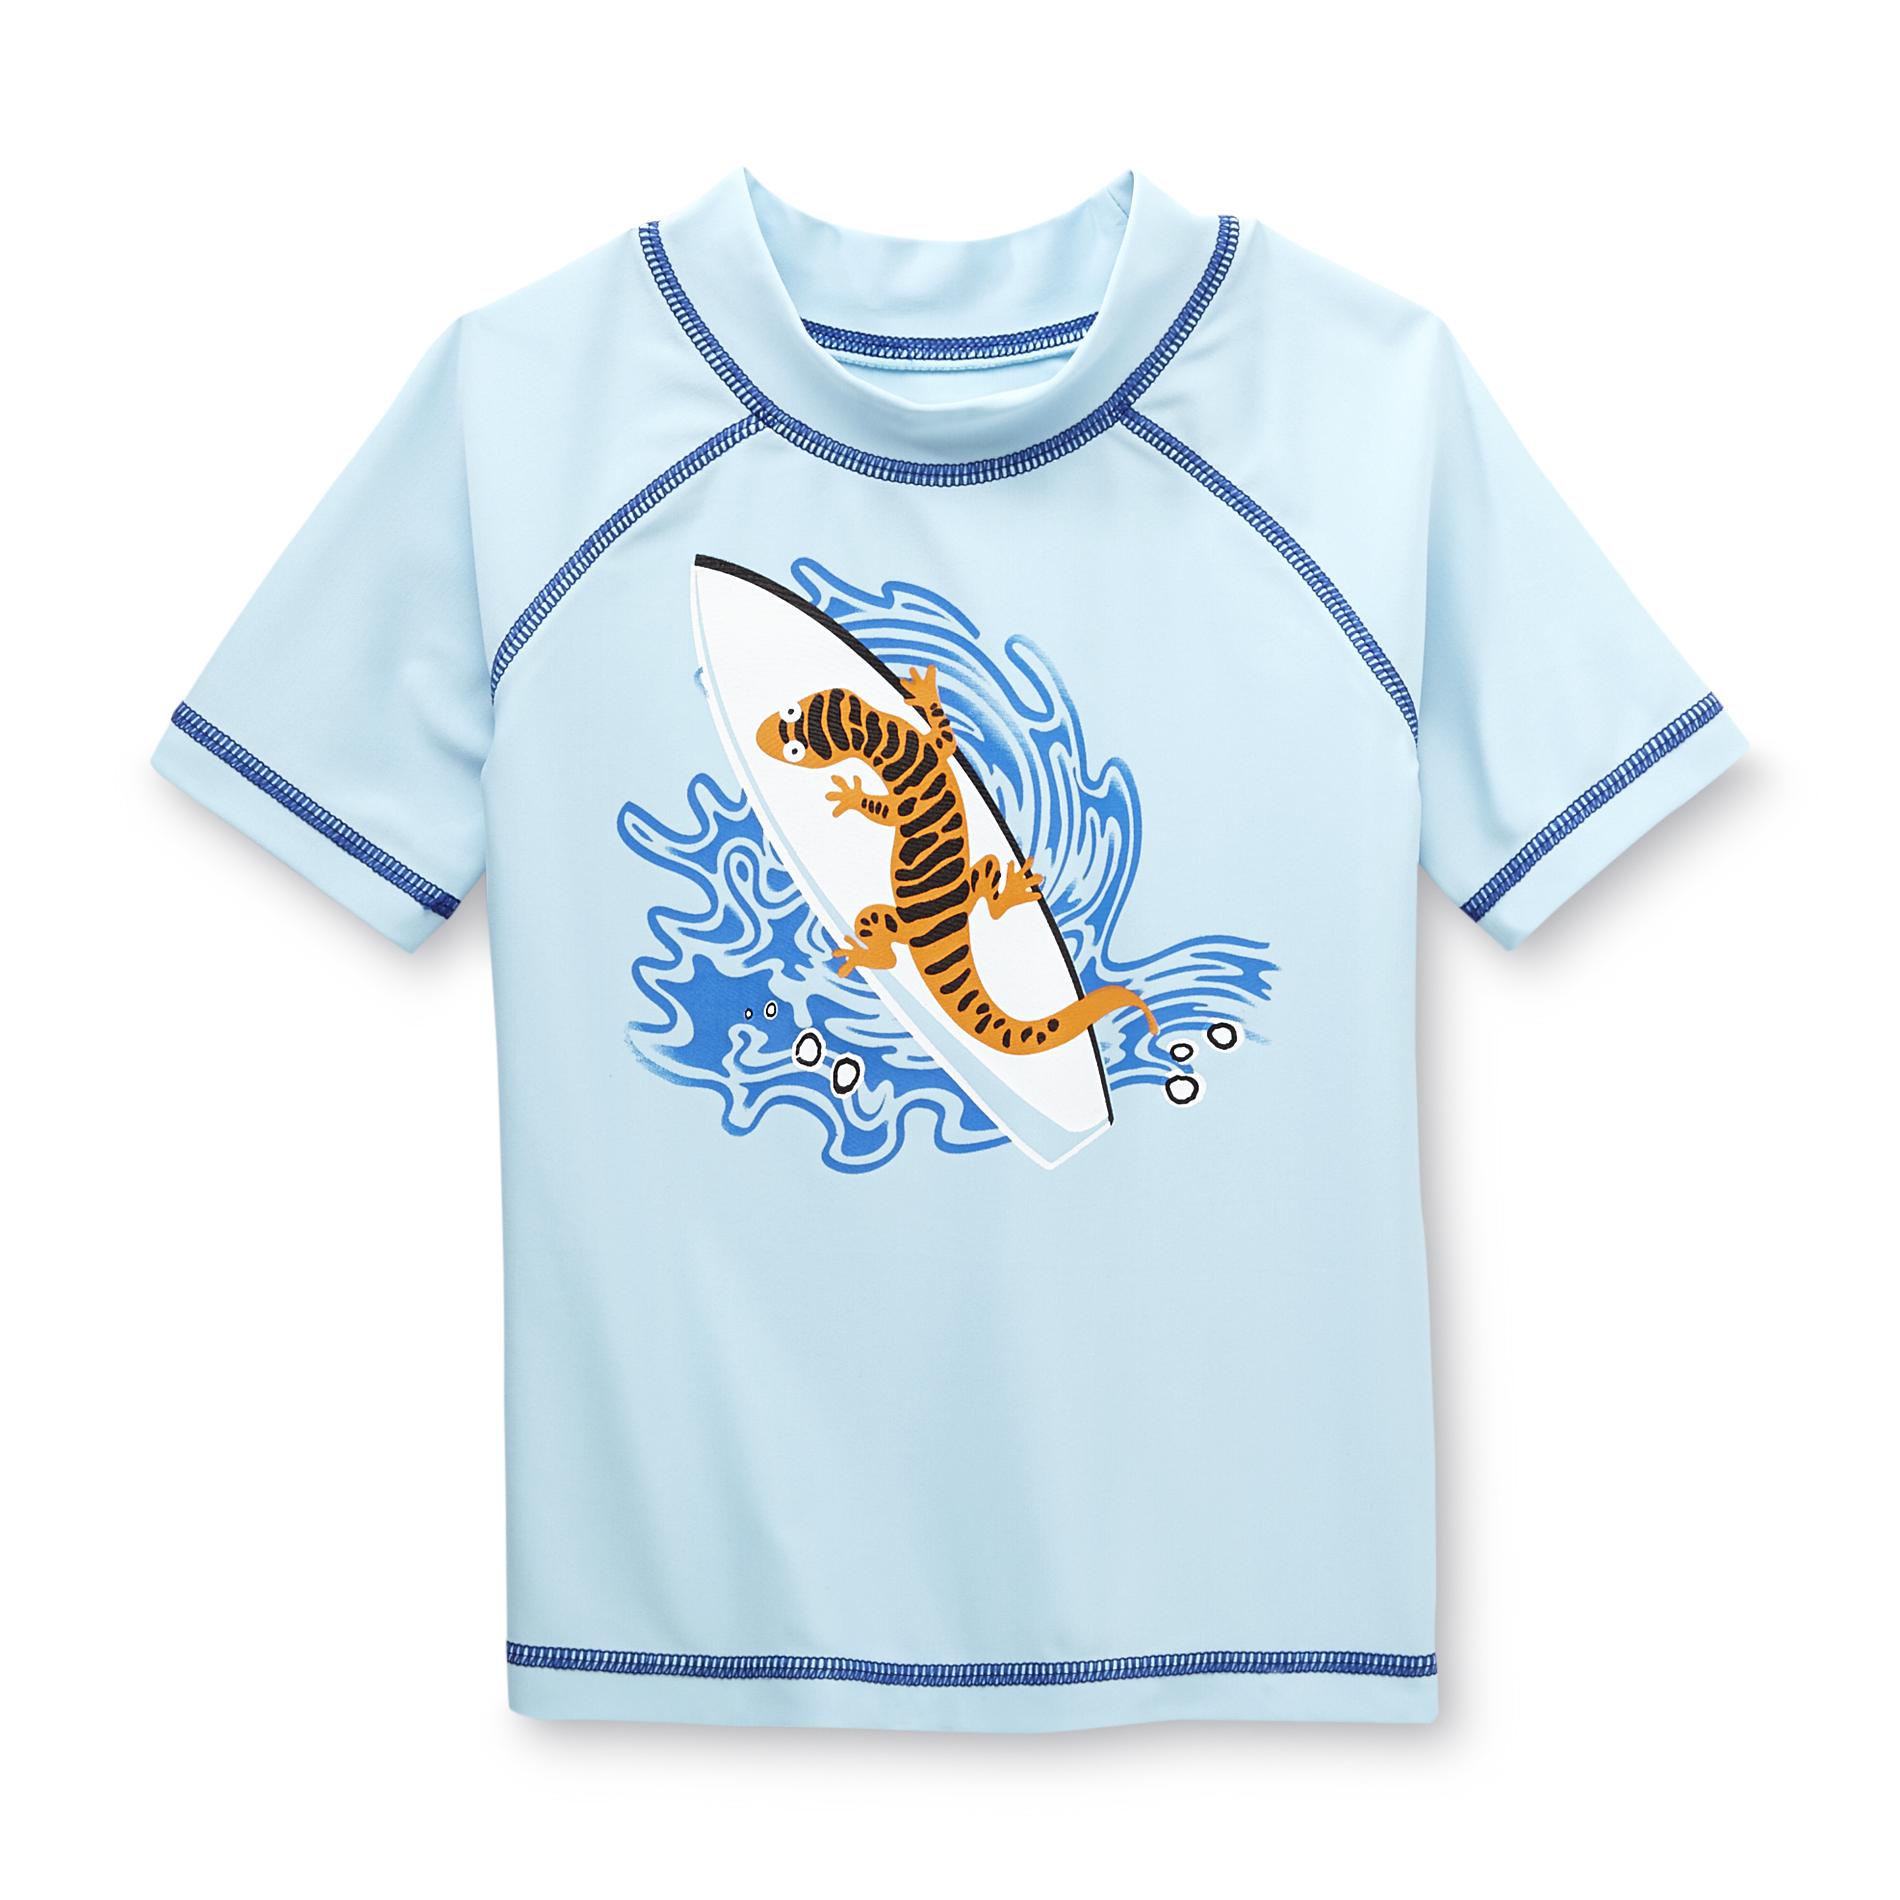 Joe Boxer Infant & Toddler Boy's Rash Guard Shirt - Lizard & Surfboard